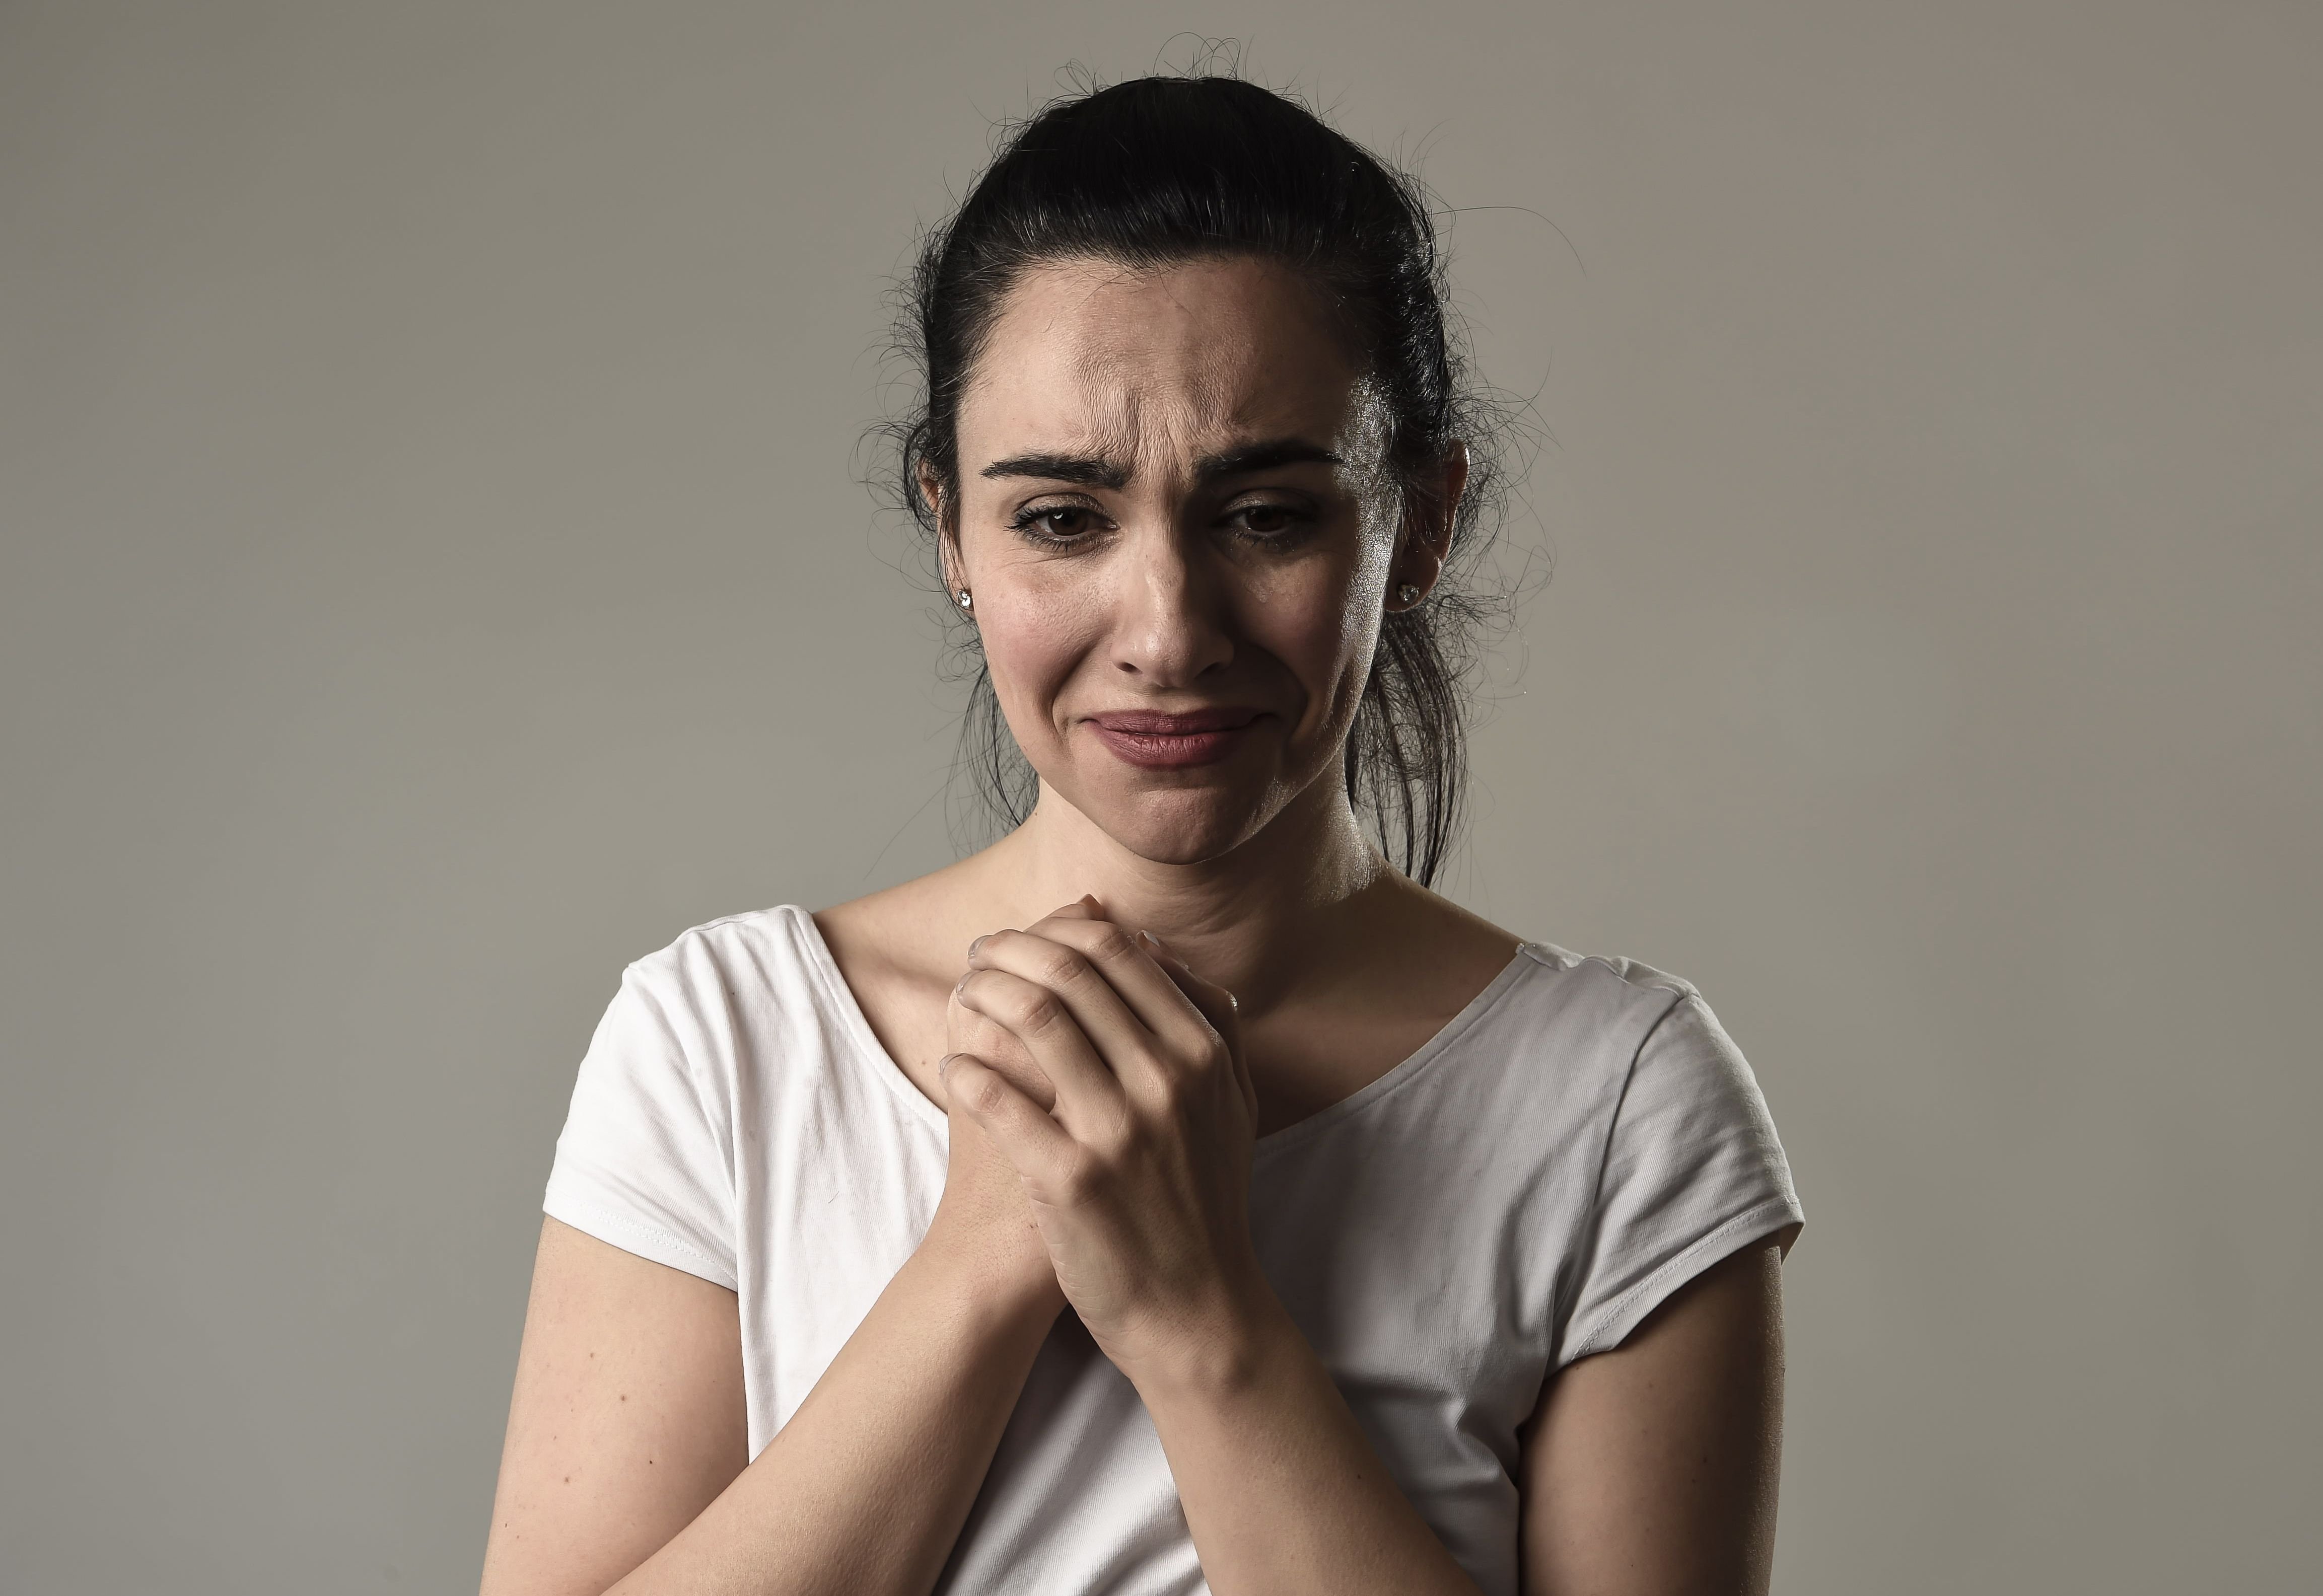 Sad woman crying. | Source: Shutterstock 